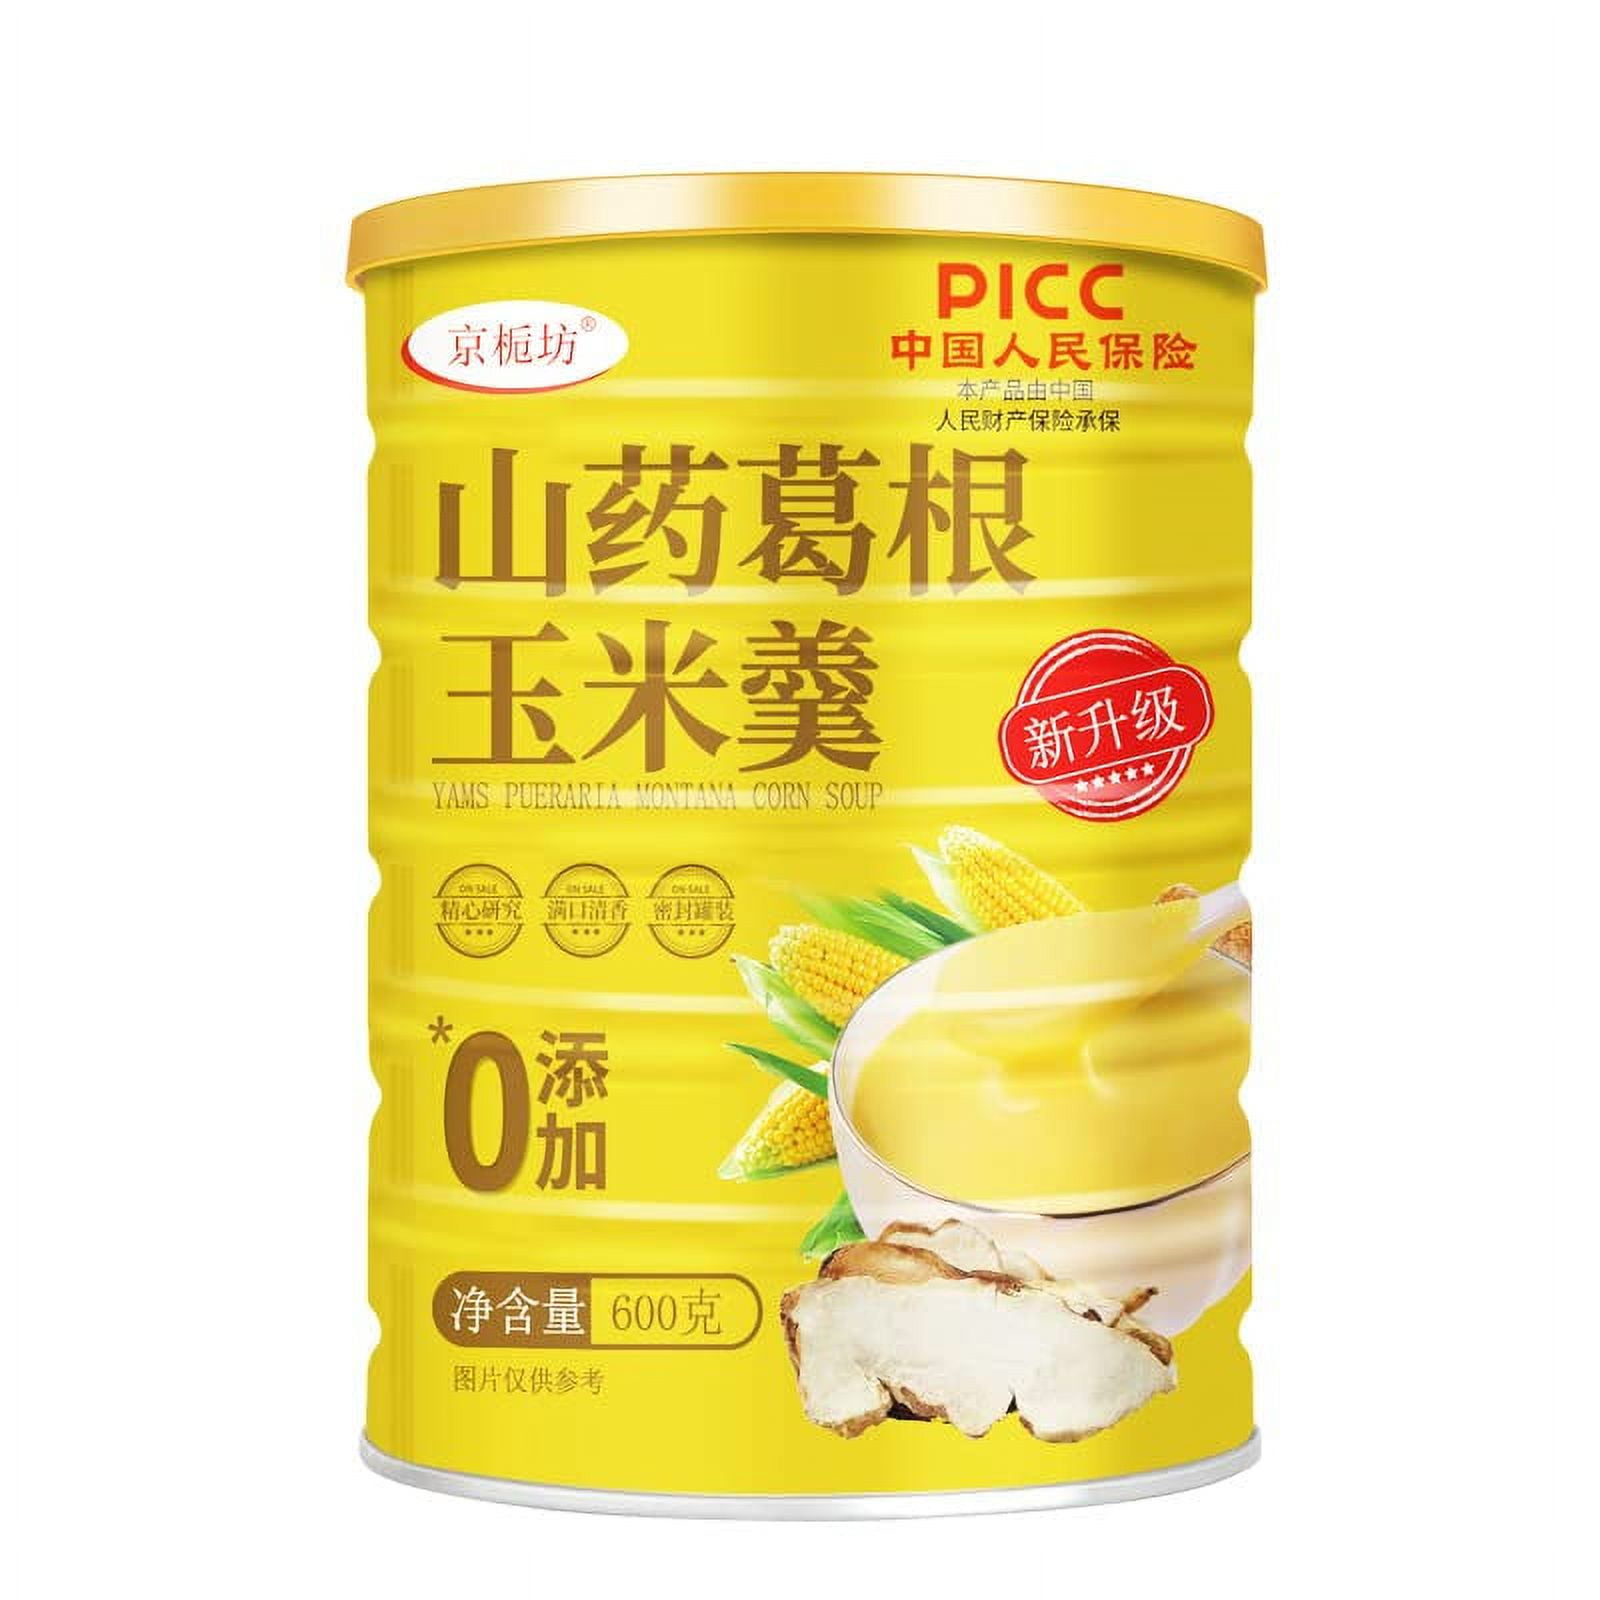 山药葛根玉米羹500g*1 can ,Chinese yam corn paste Lotus root starch